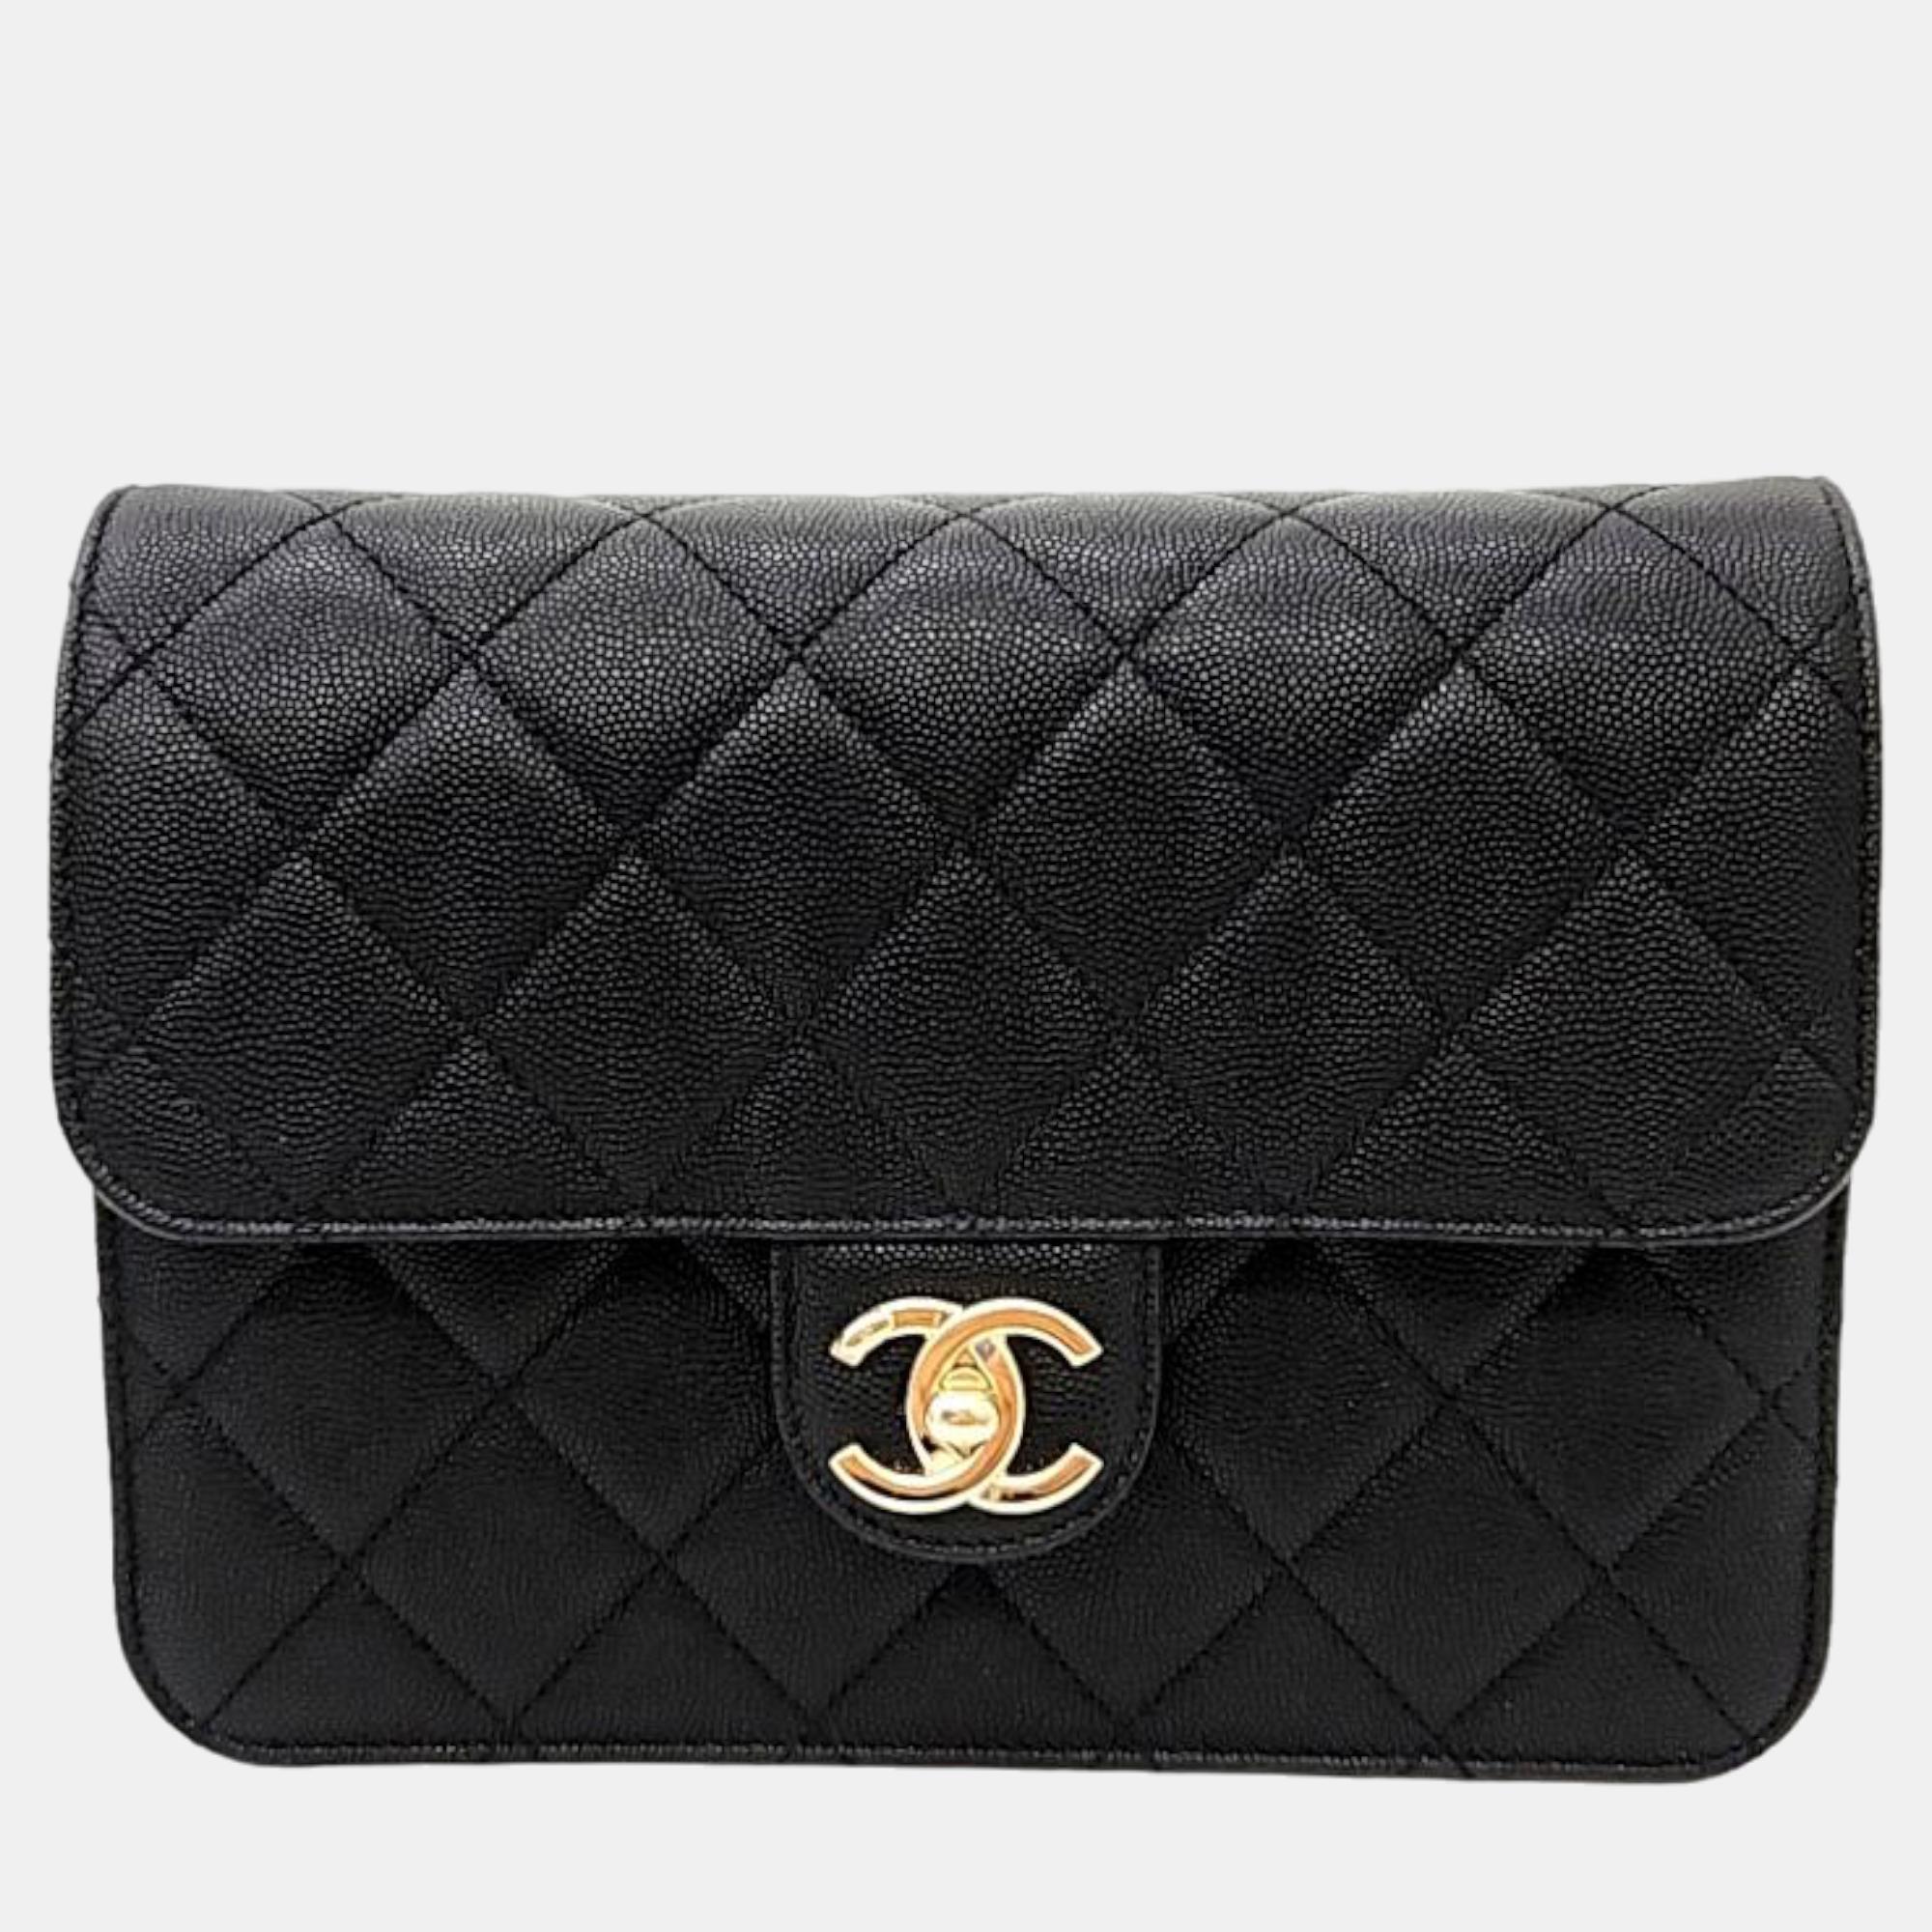 Chanel Black Leather Classic Single Flap Bag